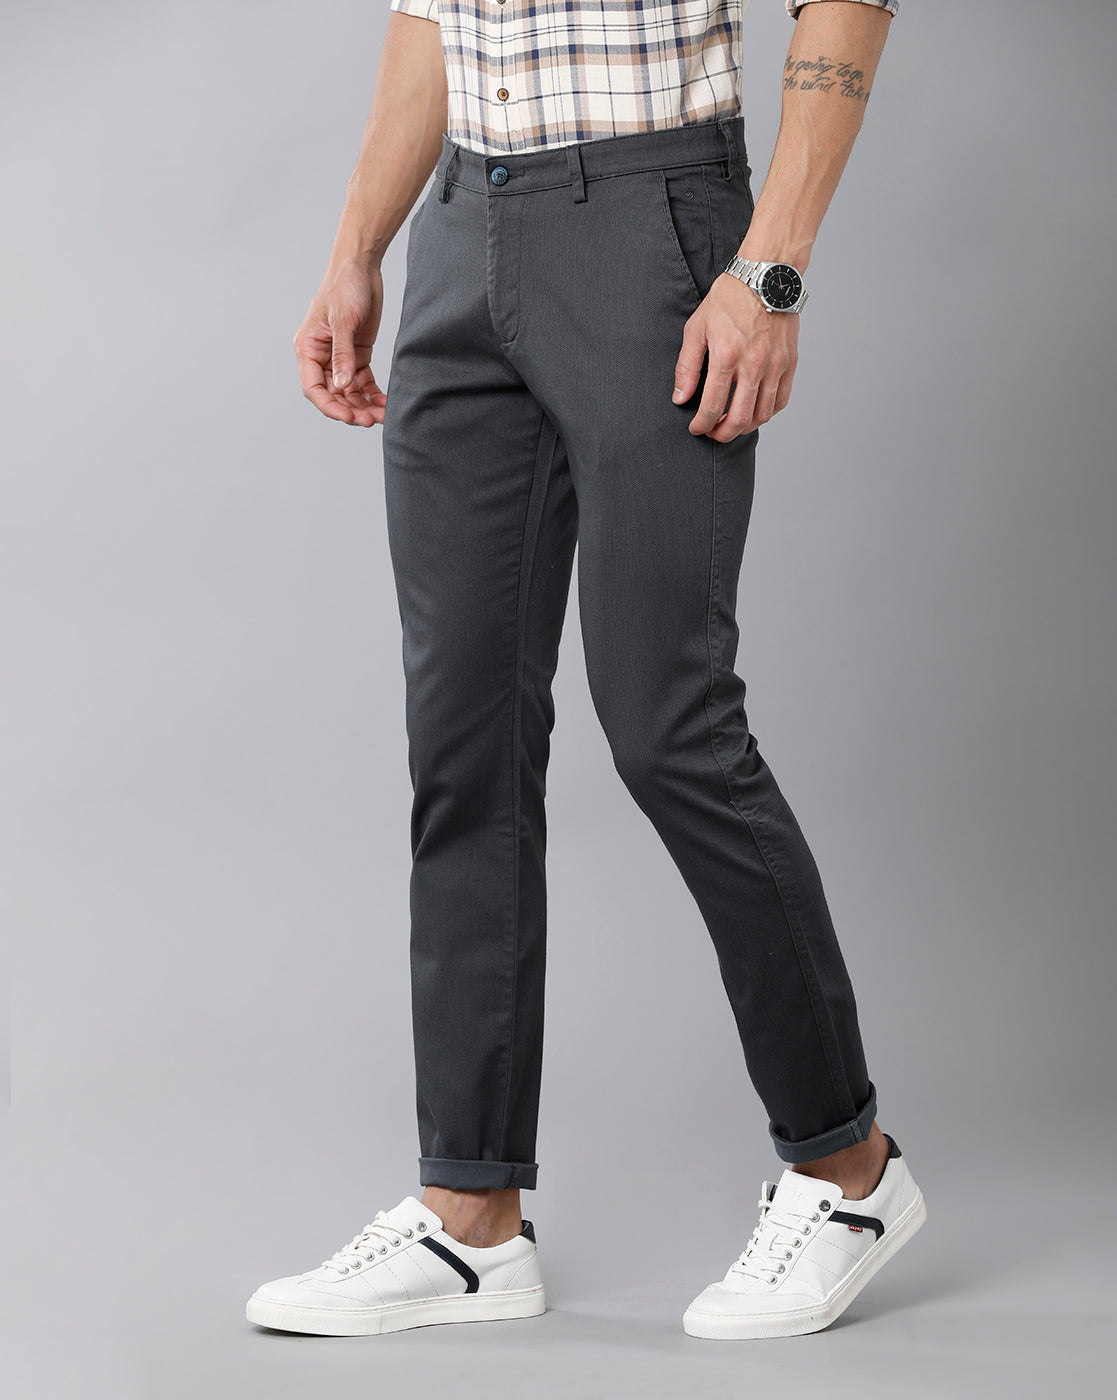 Sixth Element light grey cotton casual trouser  G3MCT0555  G3fashioncom